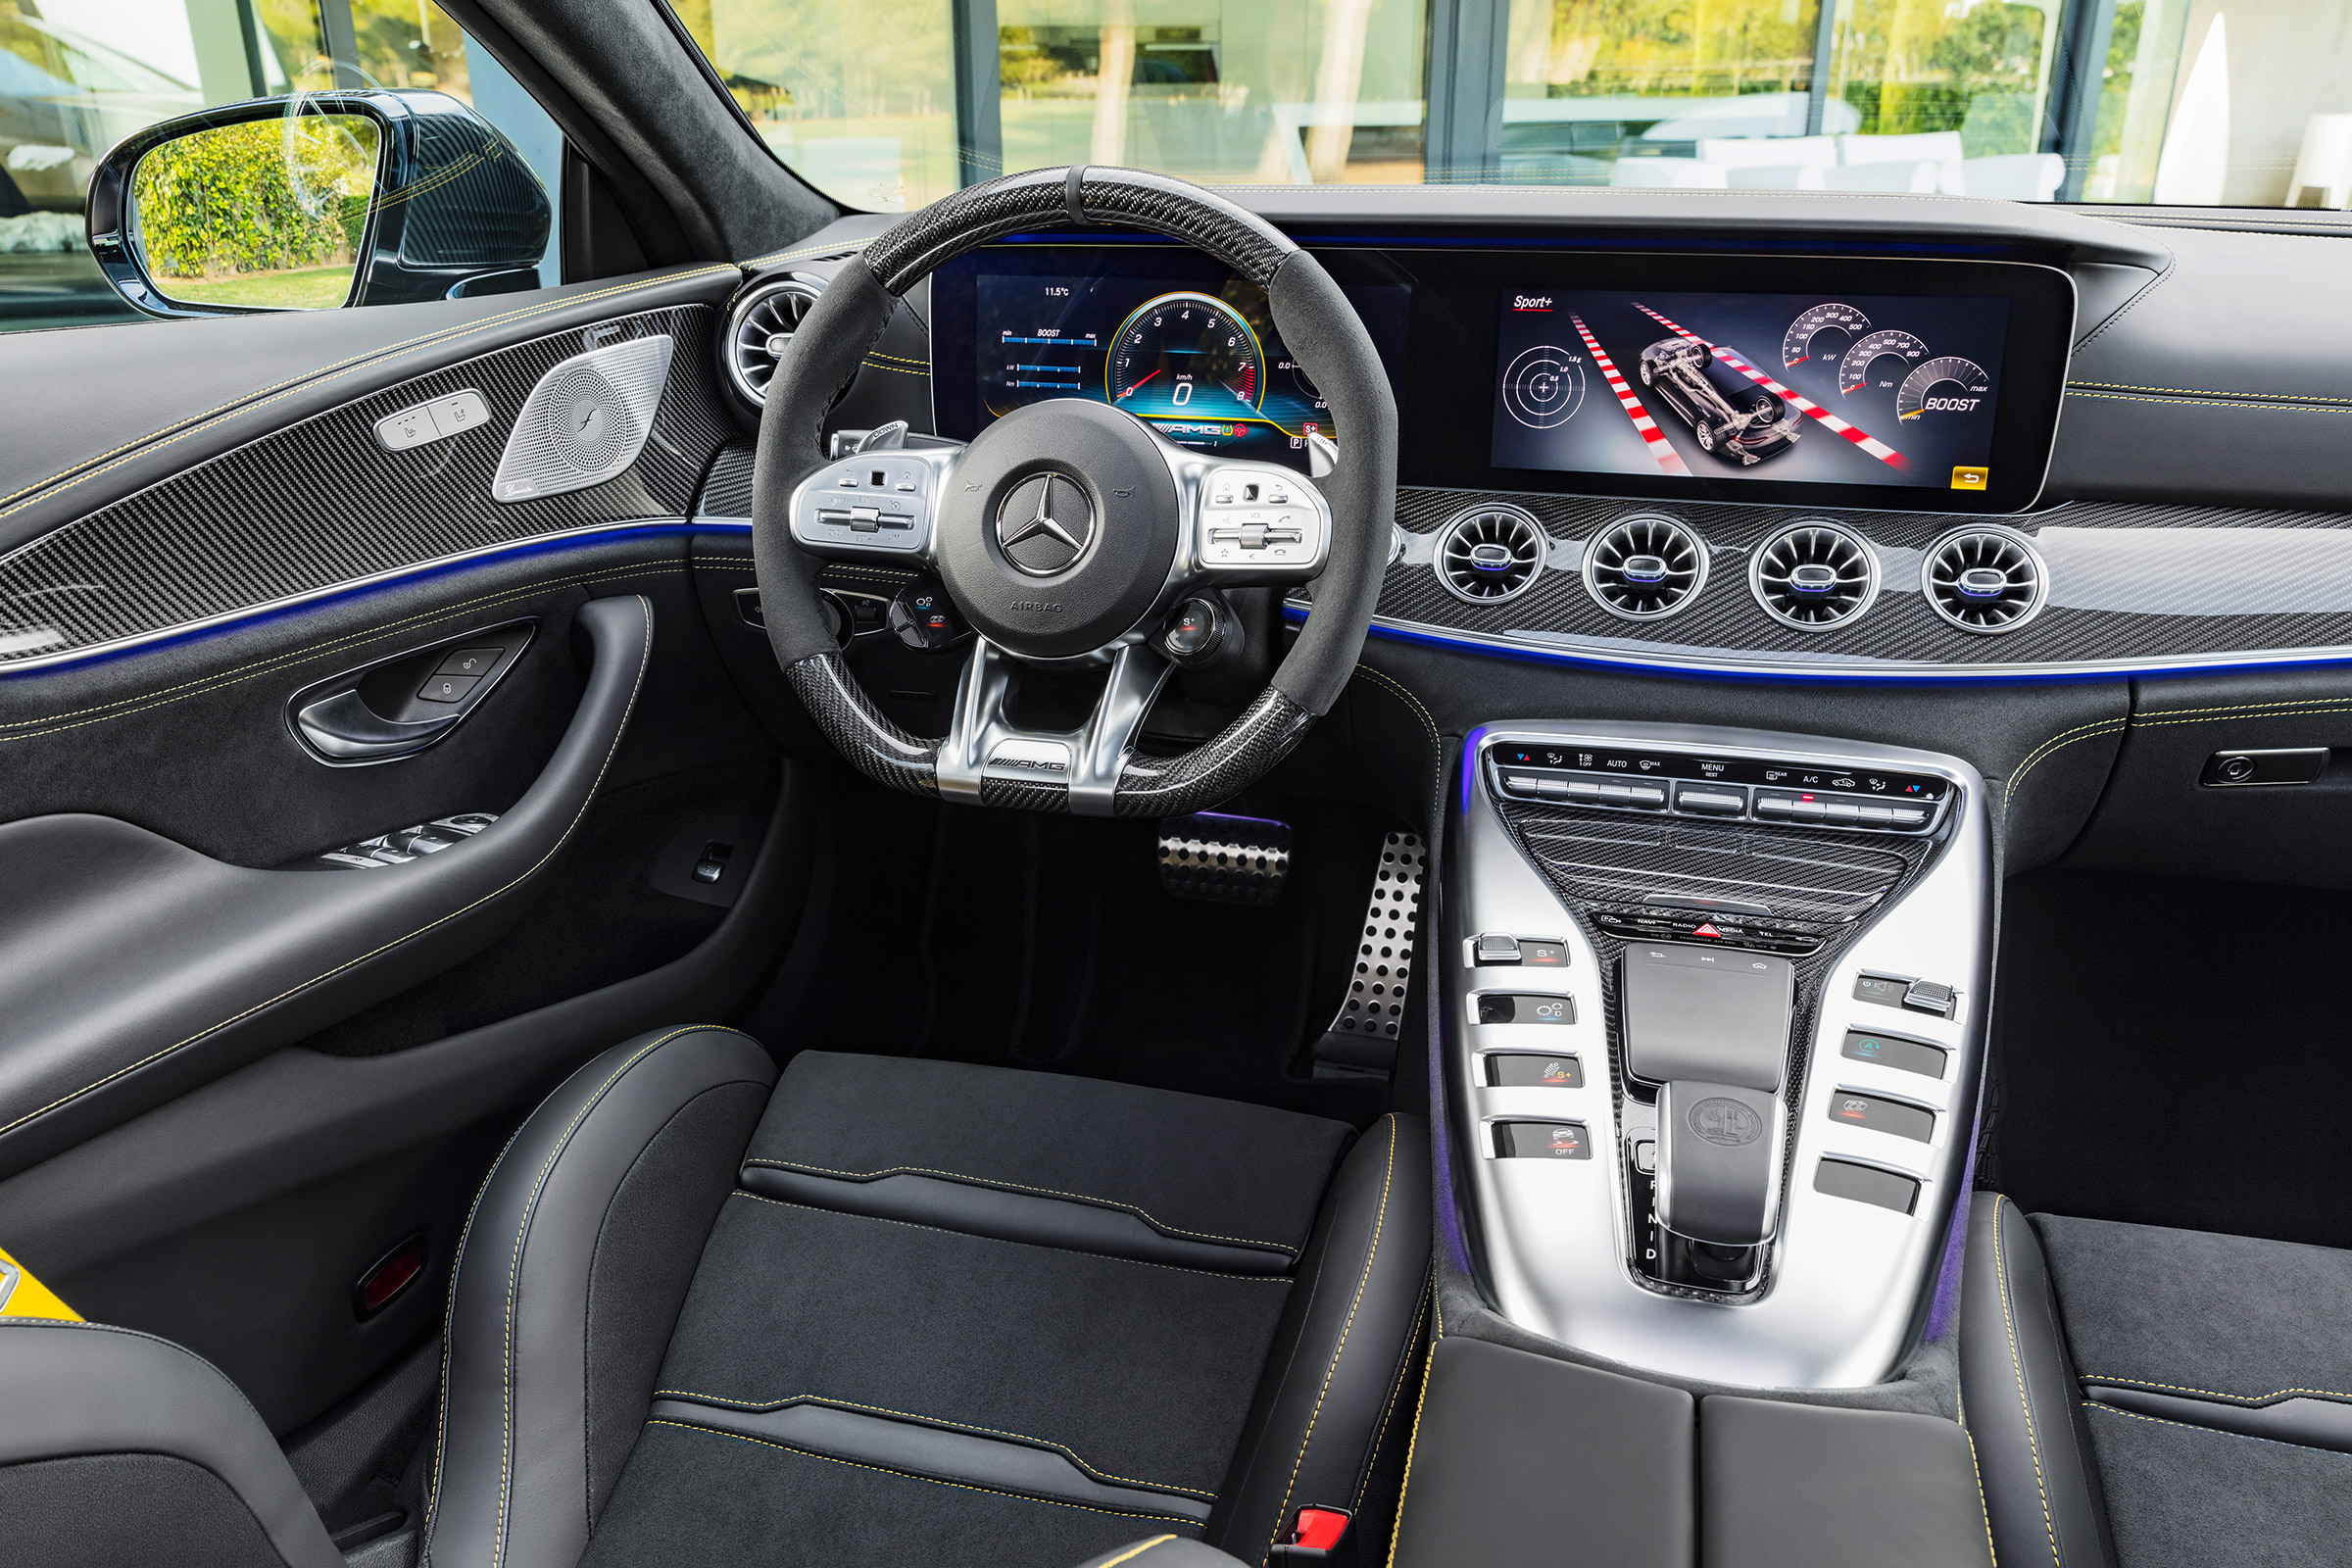 Mercedes Amg Gt 4 Door Uk Pricing And Specs Revealed Evo